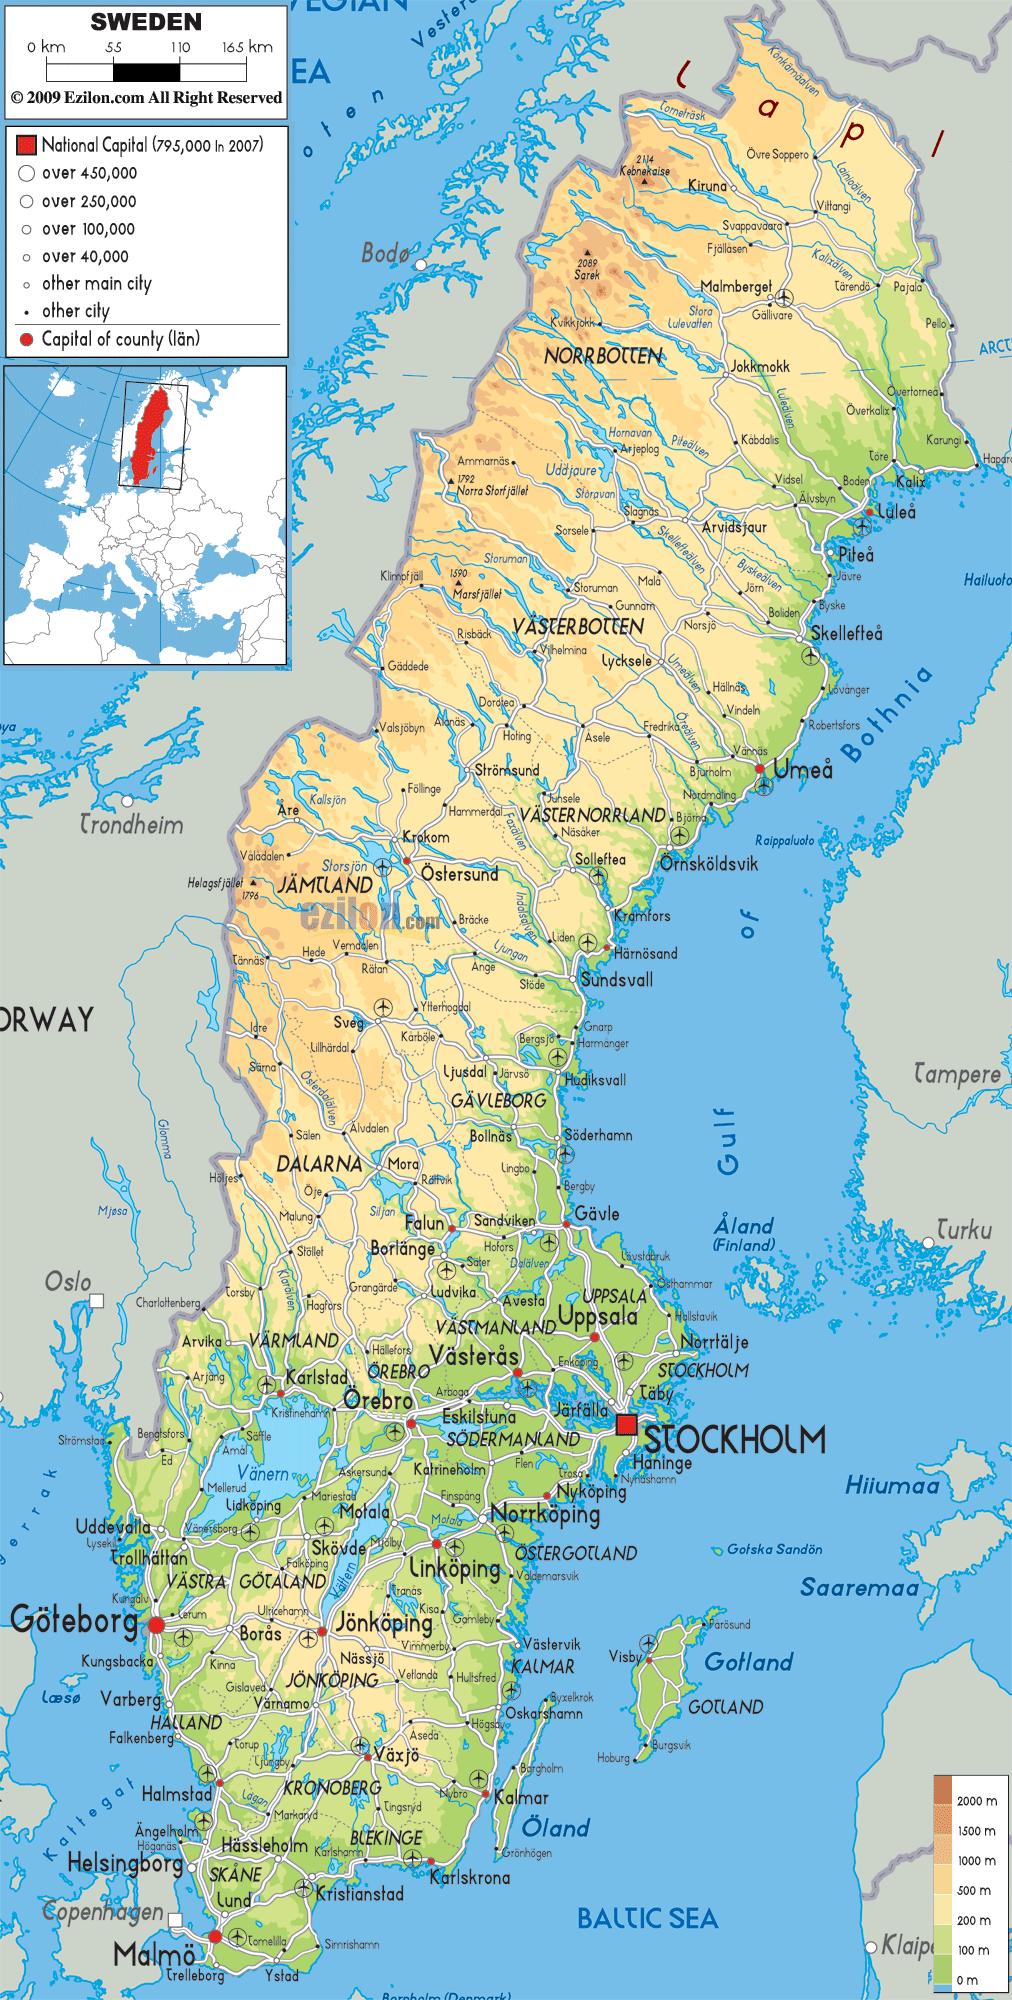 Sverige geografi karta - Geografisk karta över Sverige (Norra Europa